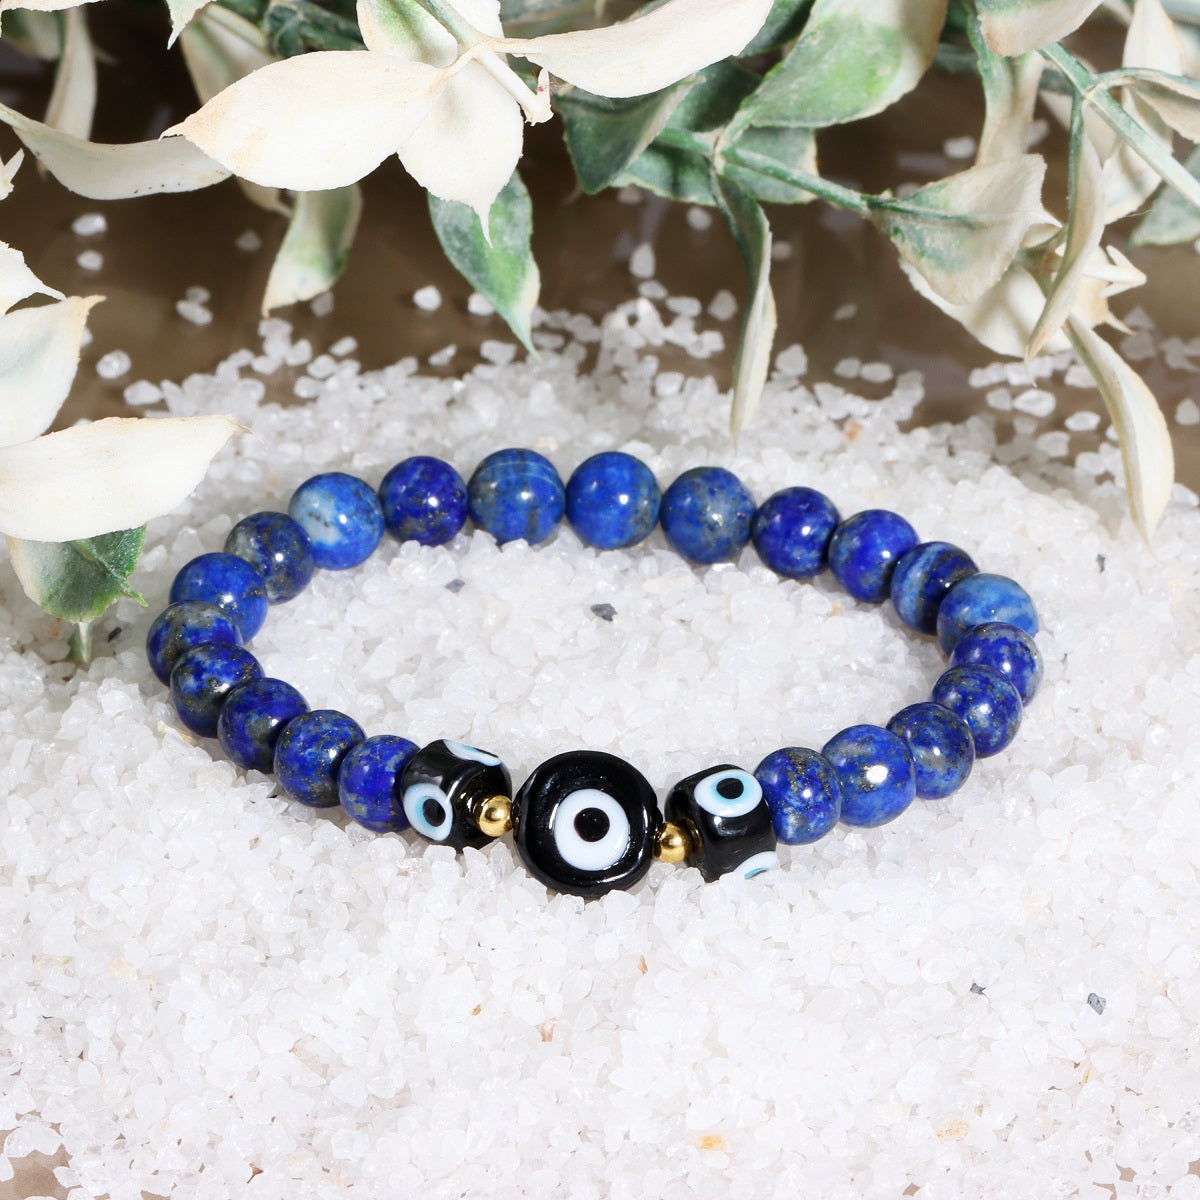 Handmade Stretchable Friendship Bracelet with Lapis Lazuli and Hematite Gemstones